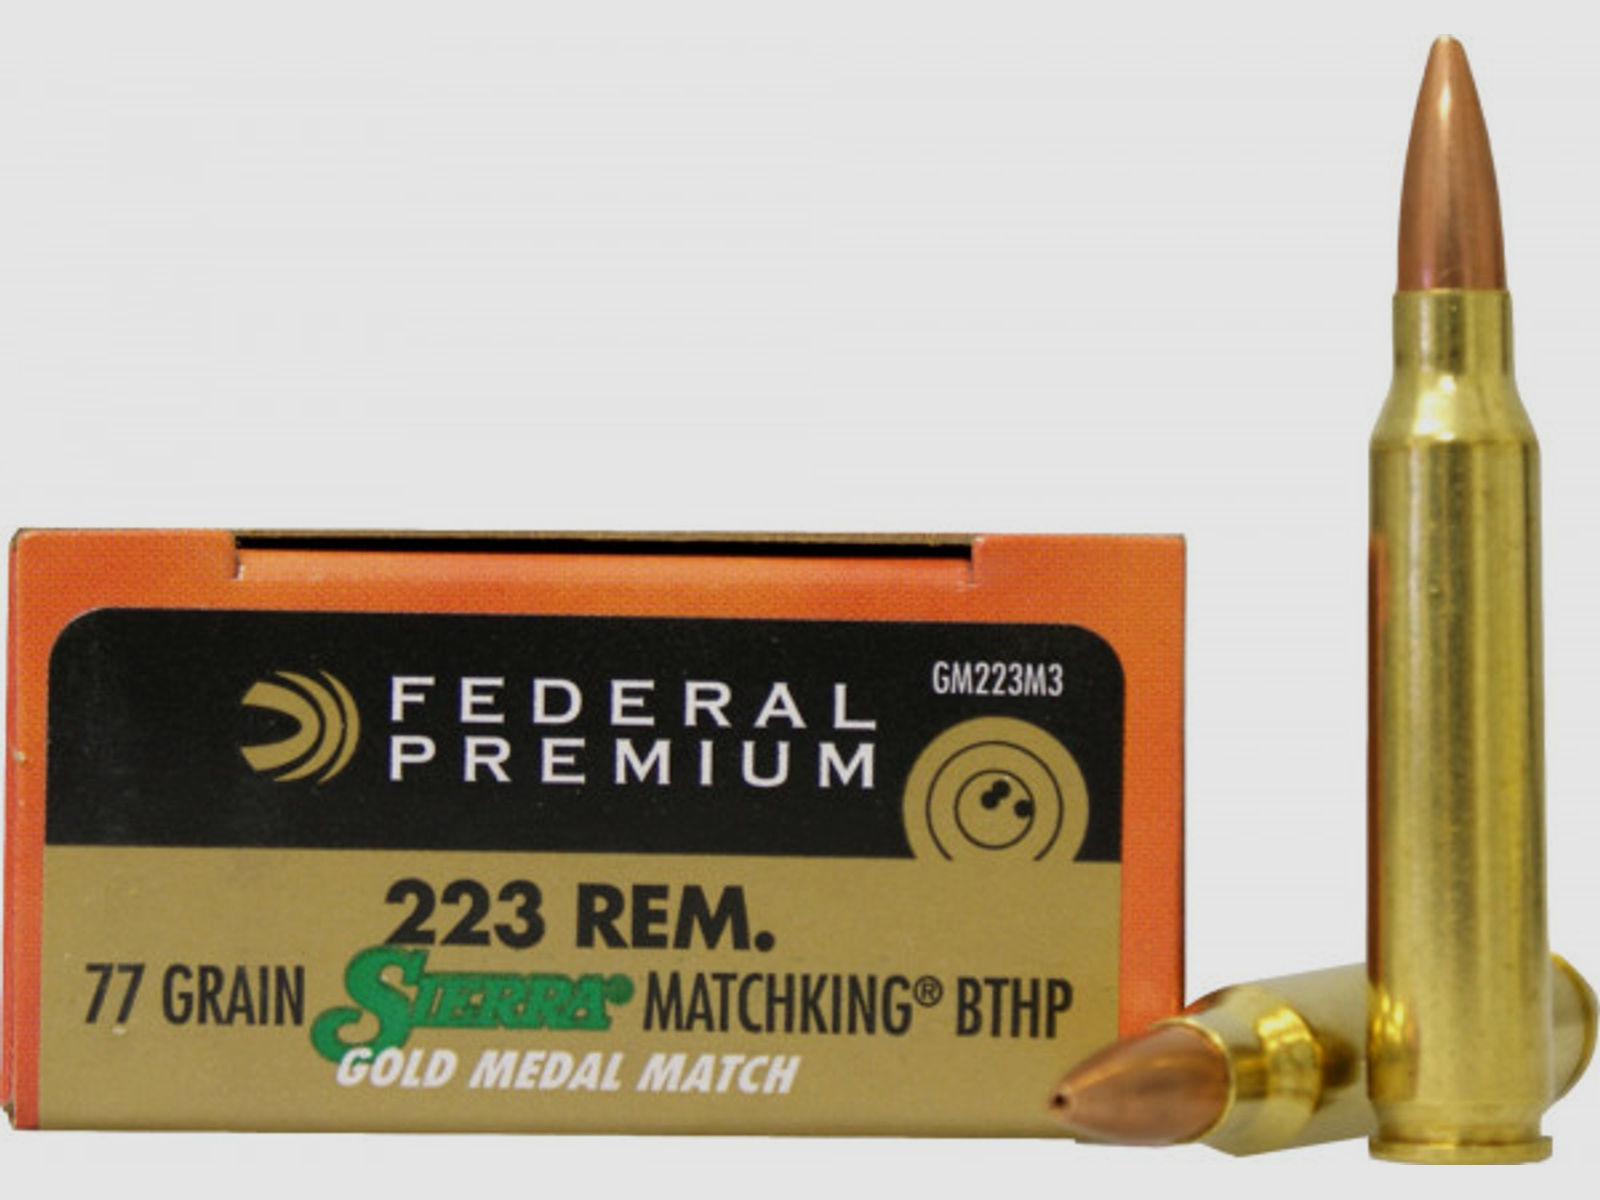 Federal Premium .223 Rem 5,00g - 77grs Sierra Match King BTHP Büchsenmunition #GM223M3